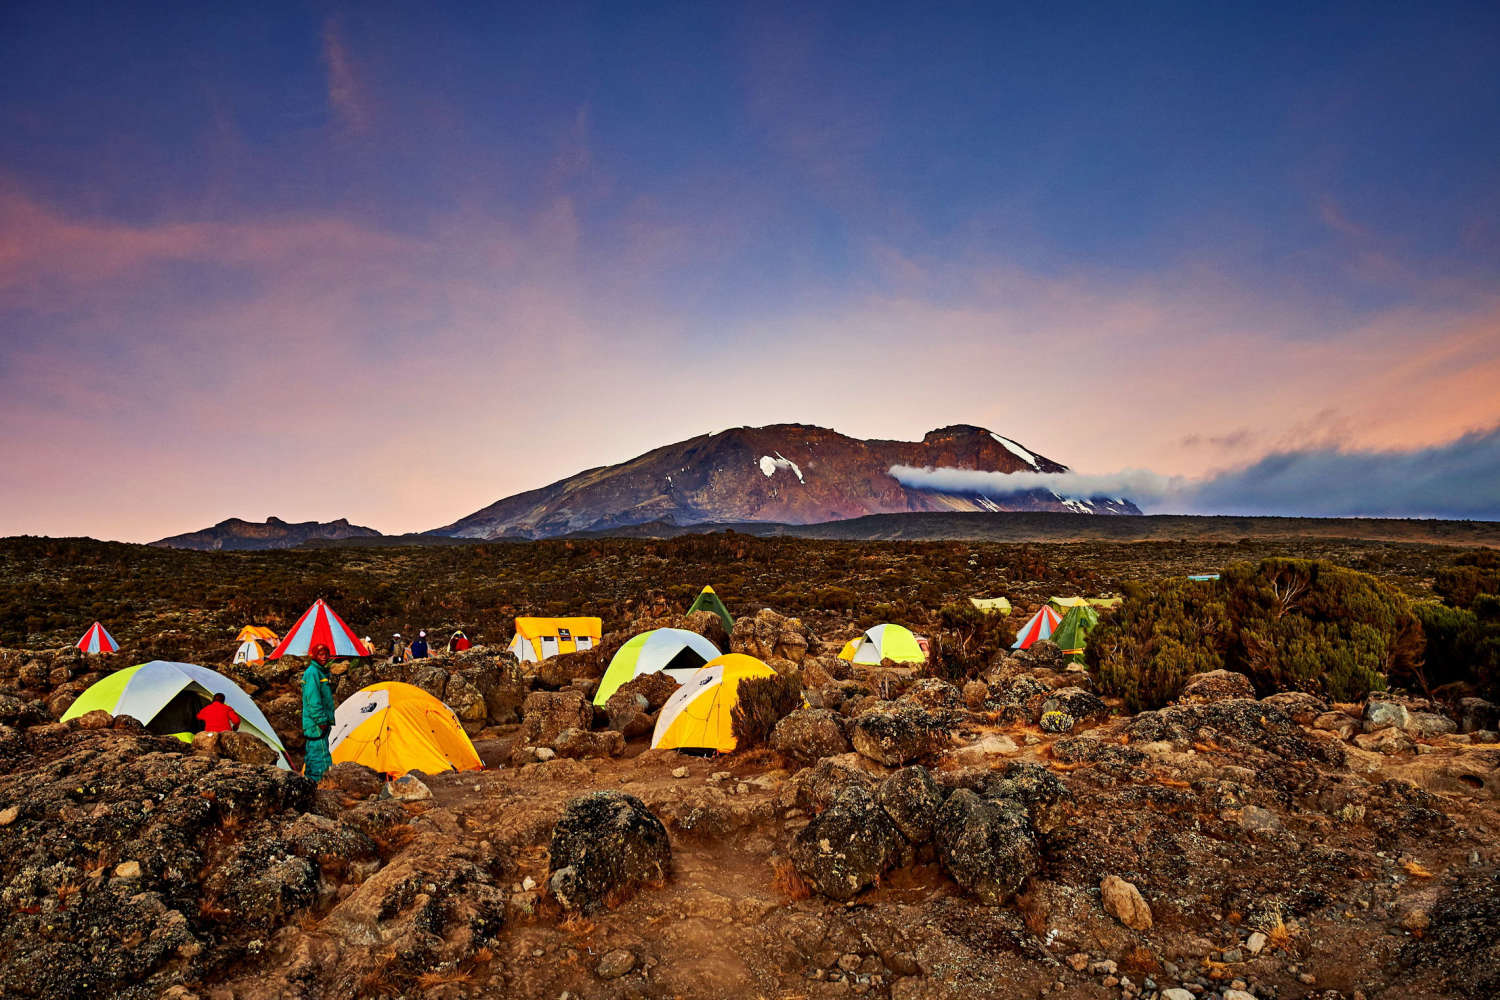 Route camping. Пик Ухуру Килиманджаро. Кемпинг Кения Килиманджаро. Гора Килиманджаро туризм. Килиманджаро гора восхождение.